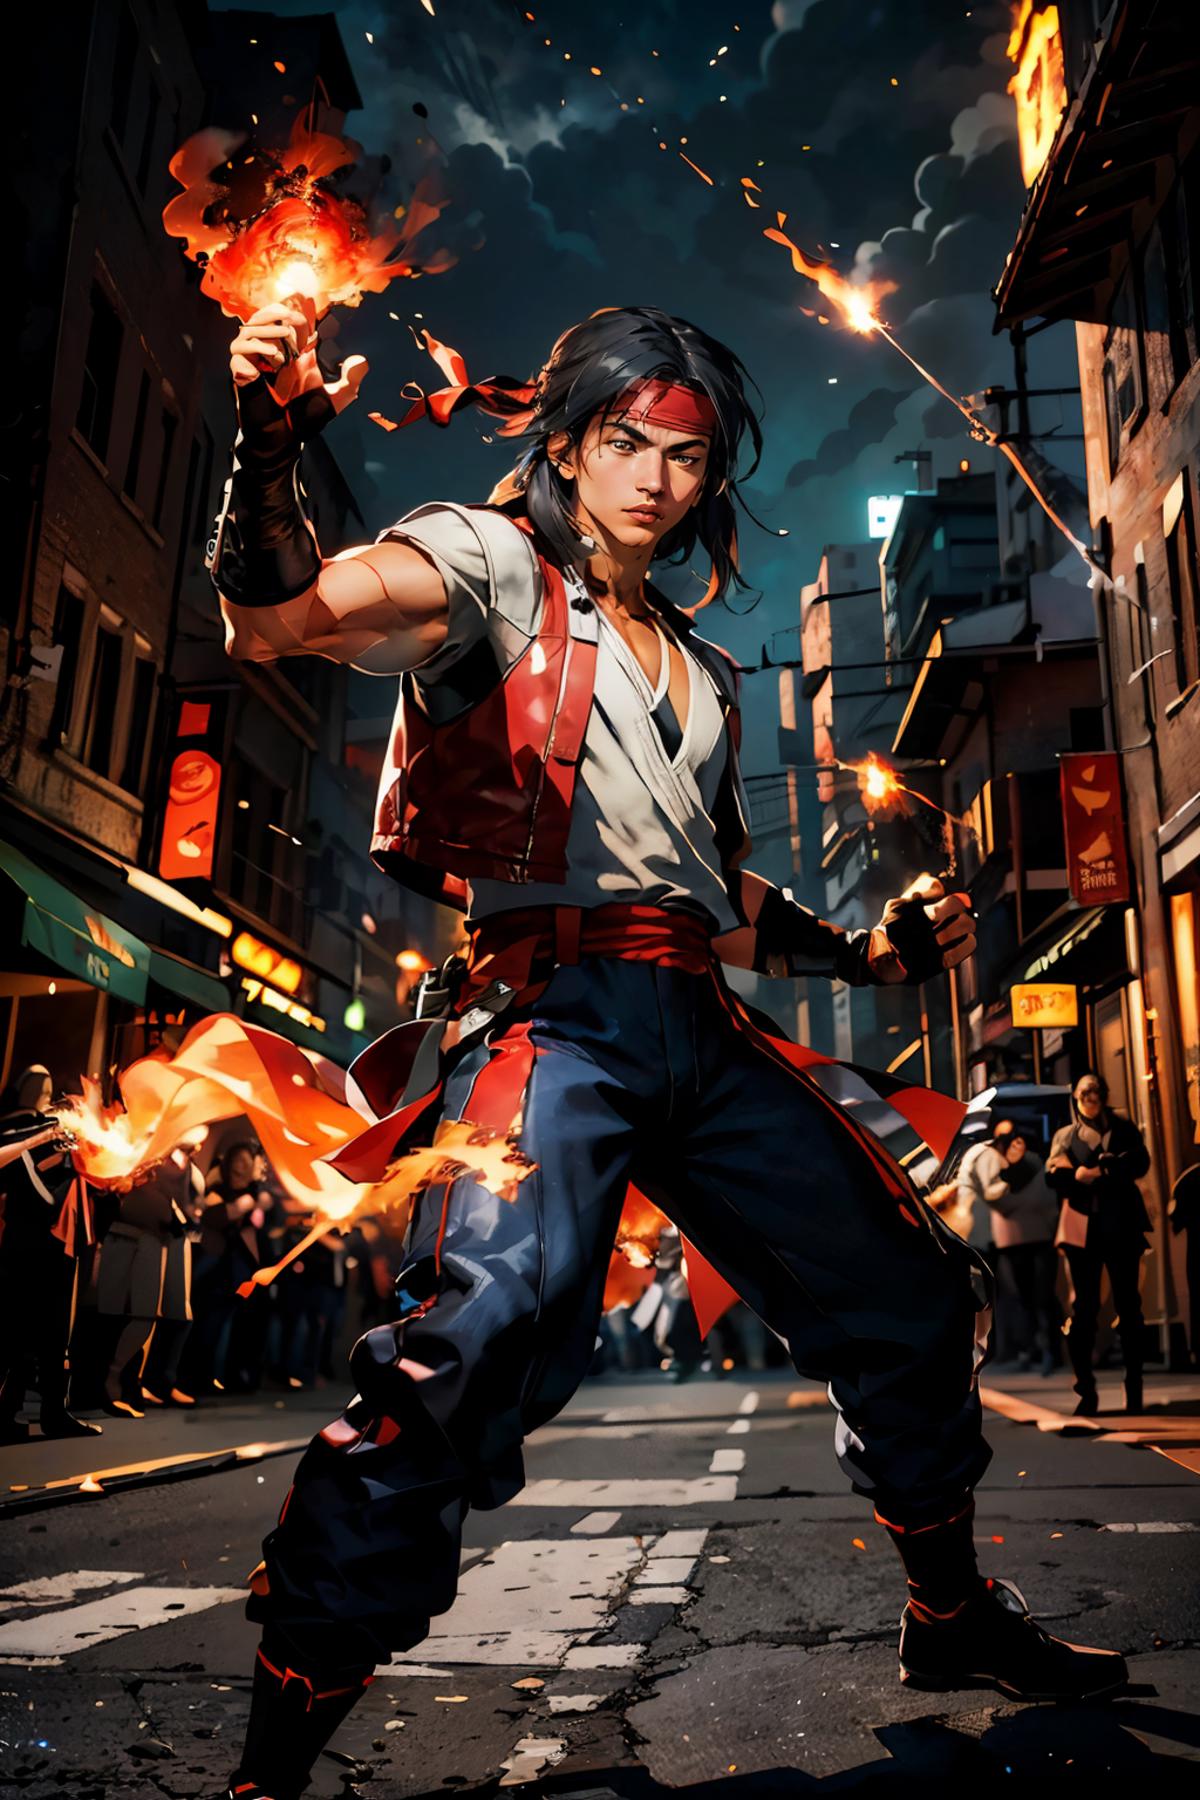 Liu Kang (Mortal Kombat) image by wikkitikki